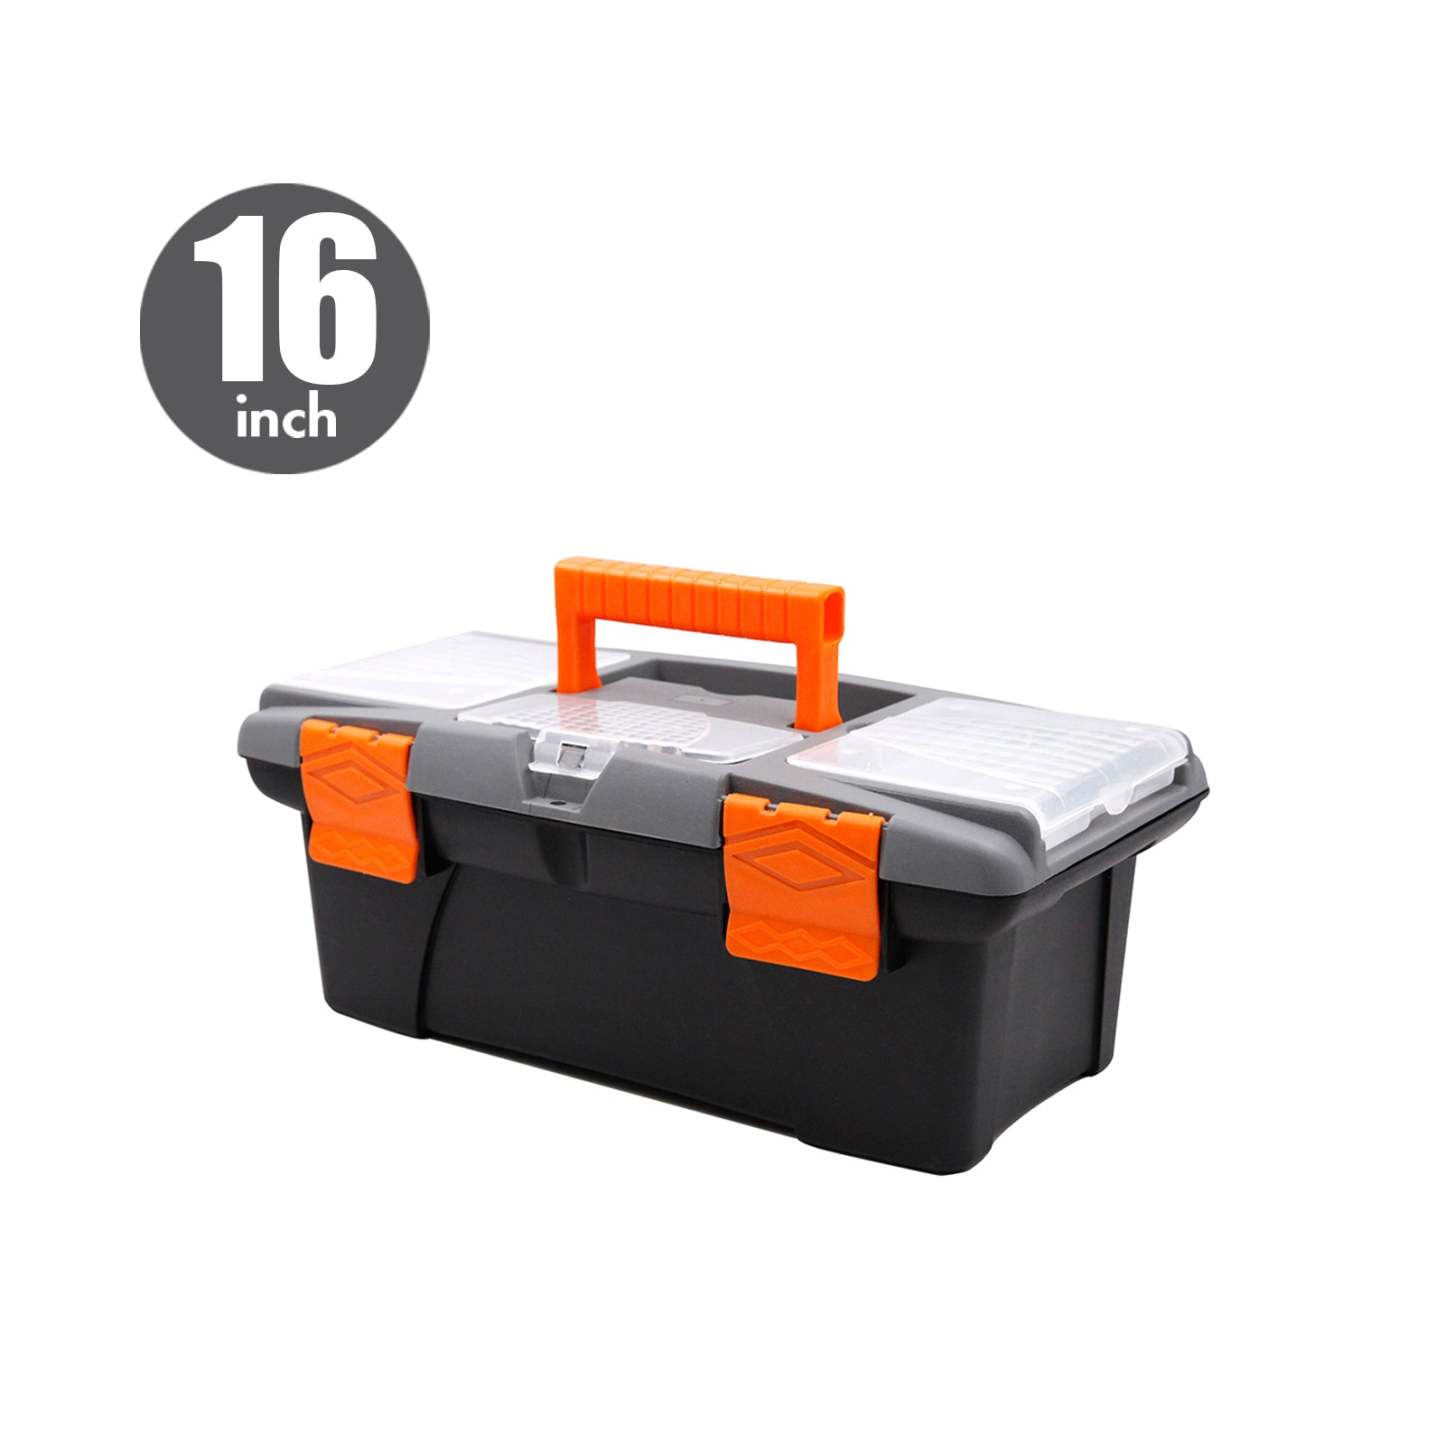 FINDER - Plastic Tool box (16 Inch)